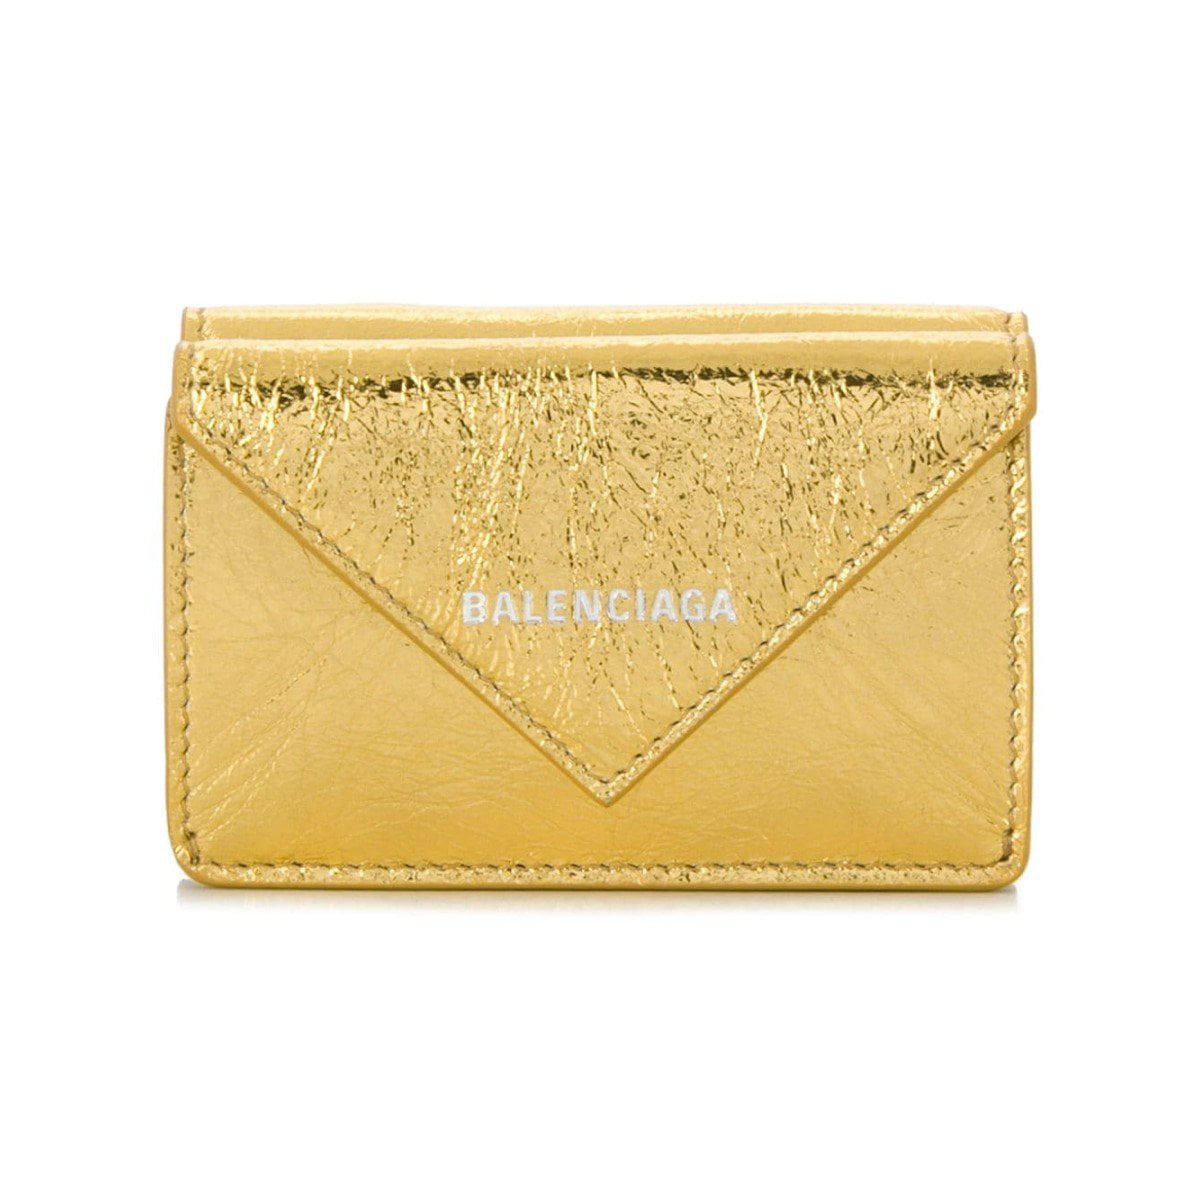 Balenciaga Metallic Gold Lambskin Leather Trifold Wallet 391446 - Walmart.com